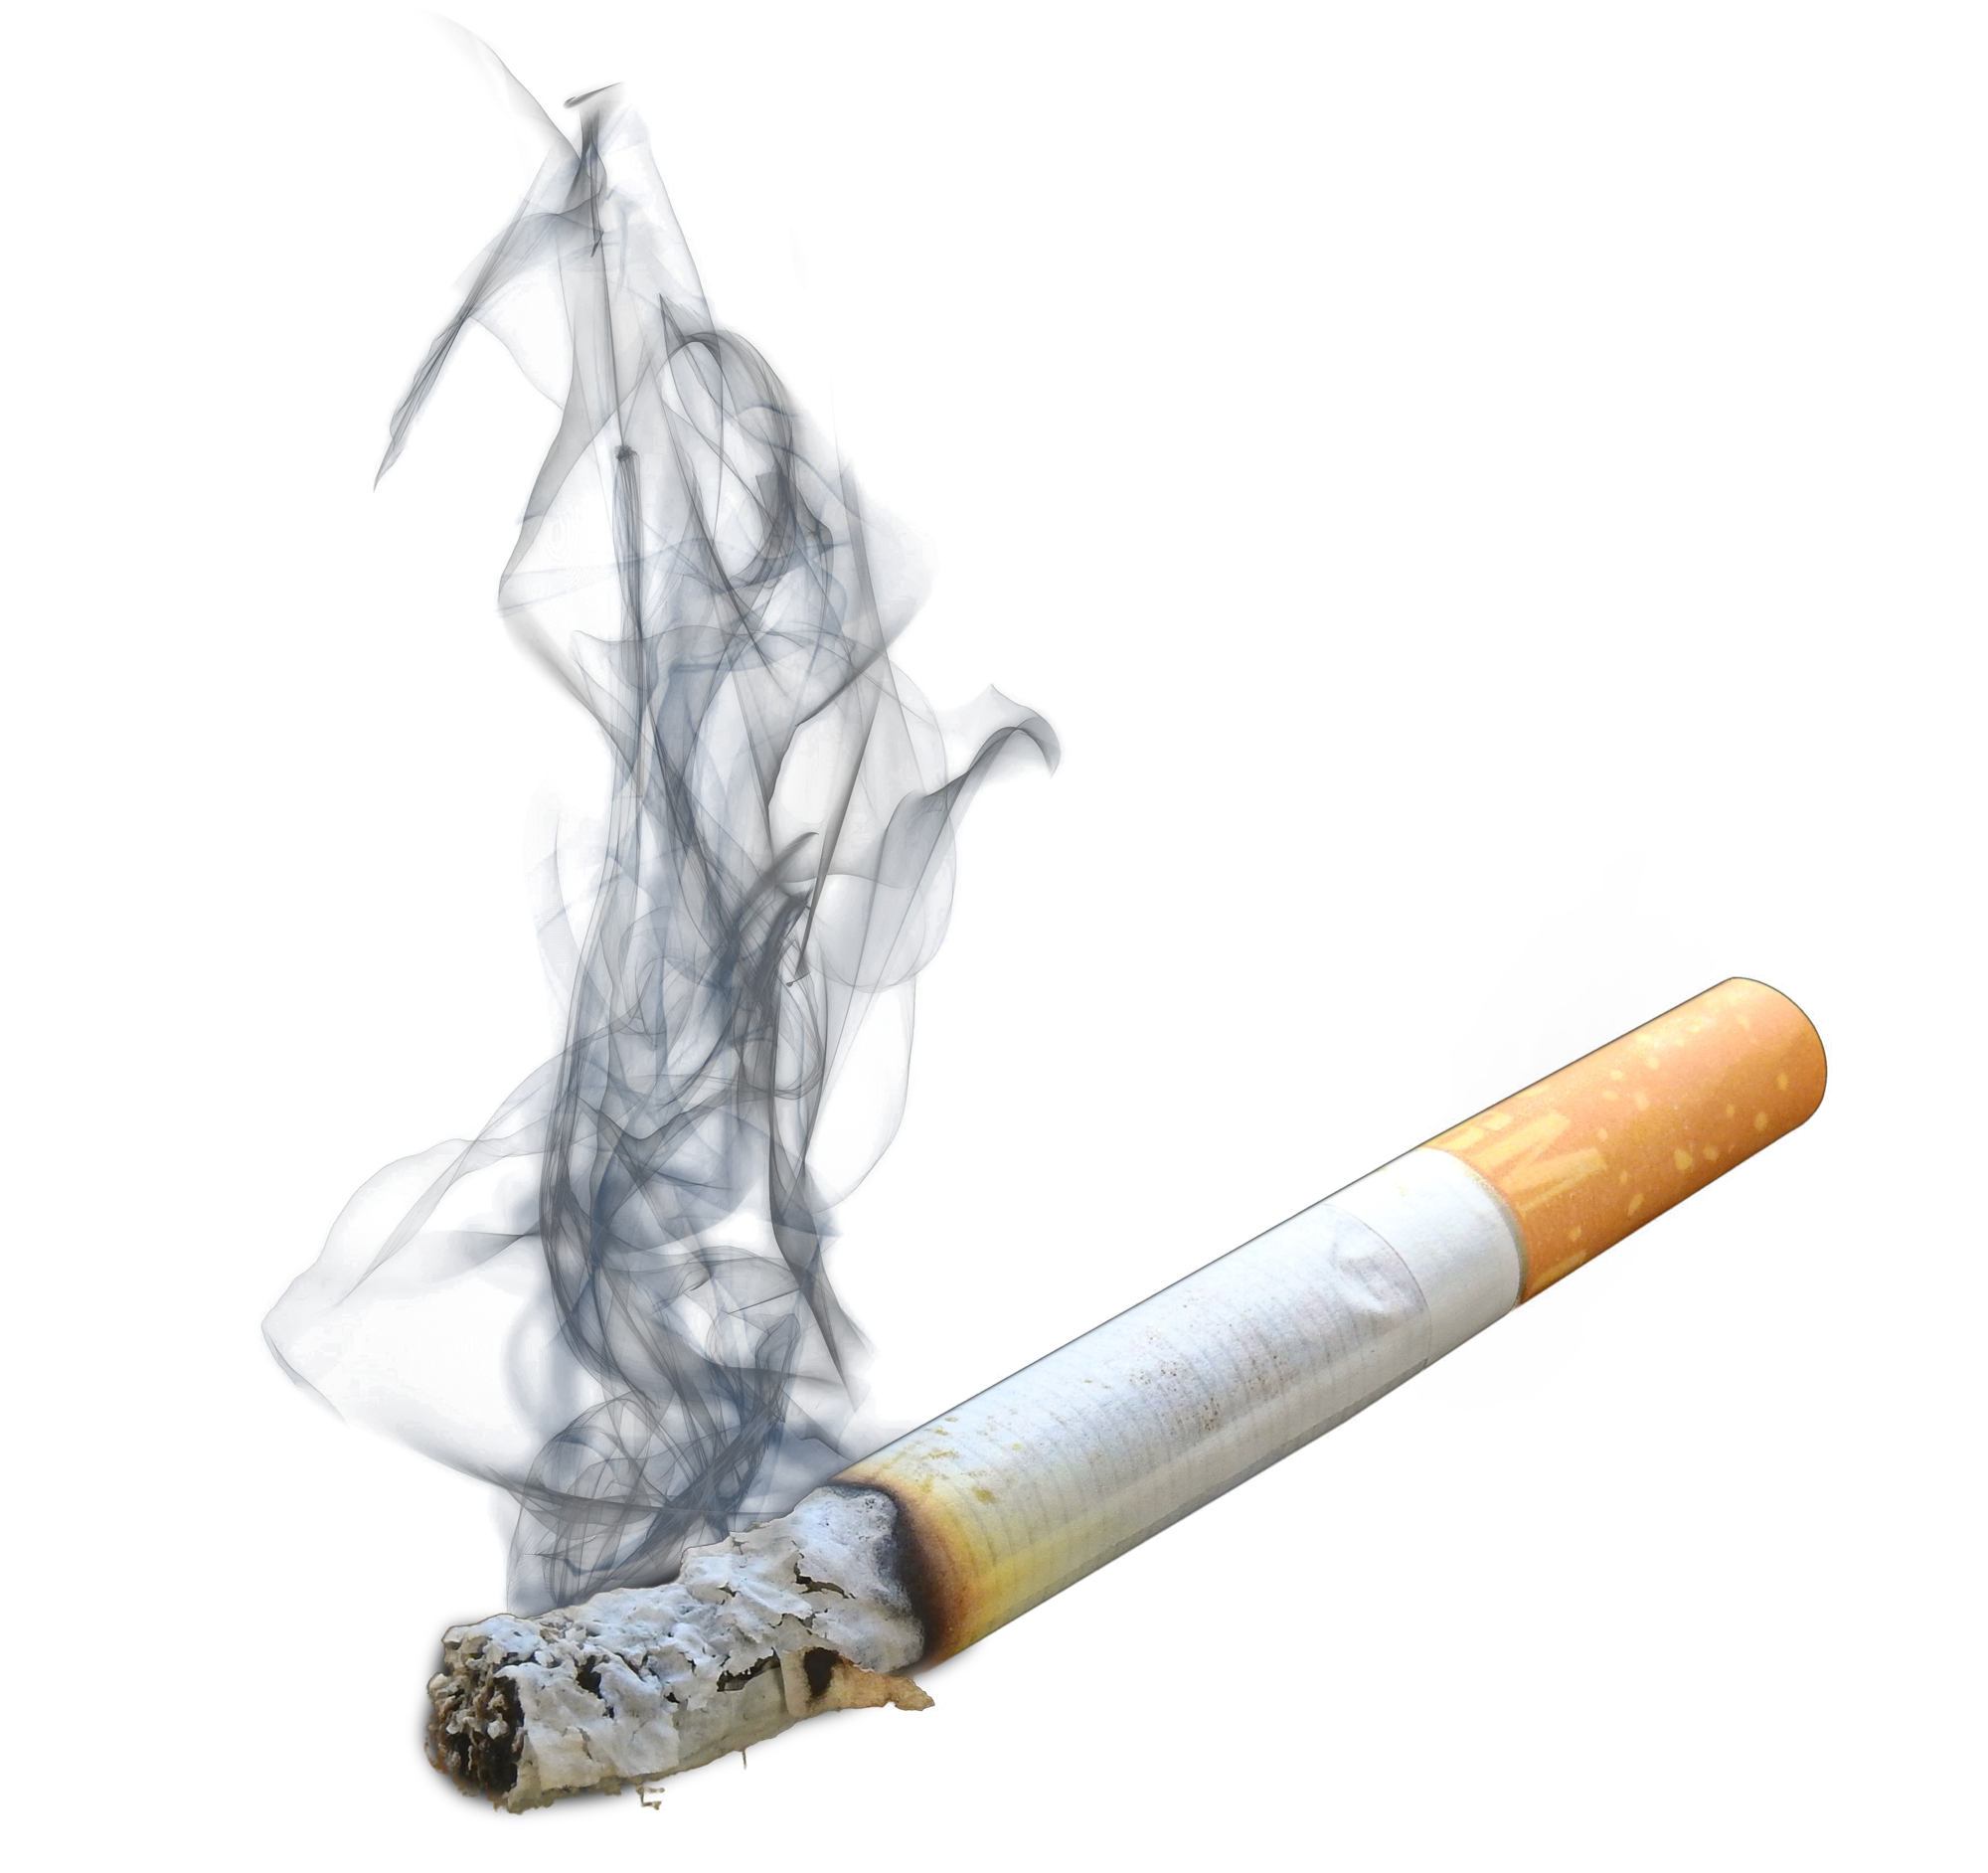 Joint smoke png. Tobacco image purepng free